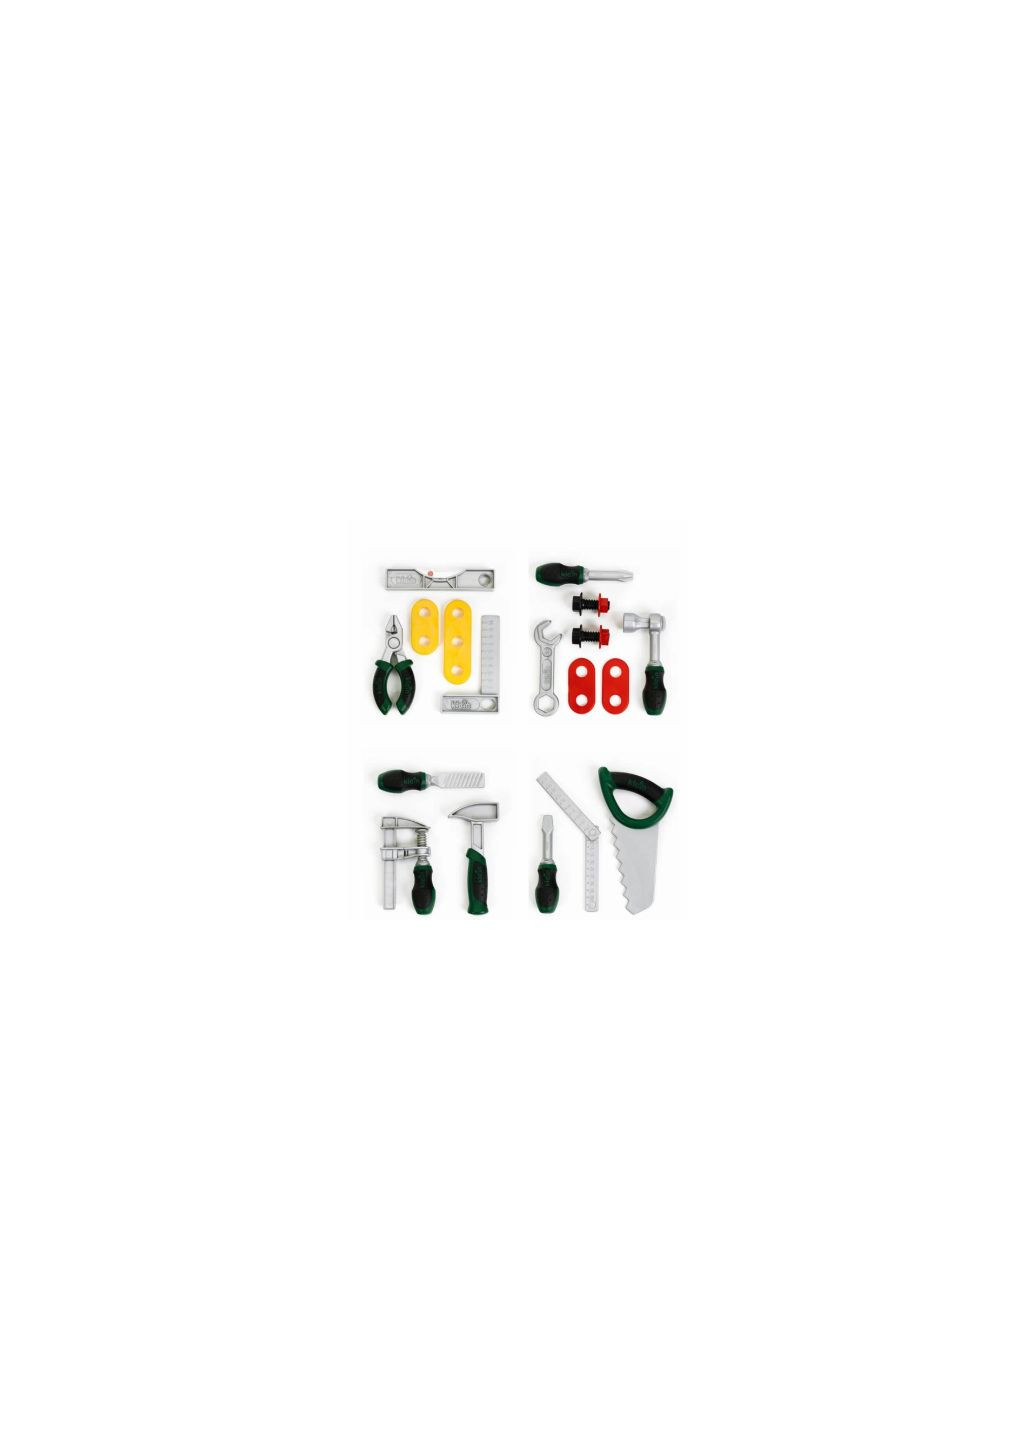 Игровой набор Набор инструментов (8007B) Bosch набір інструментів (275079137)